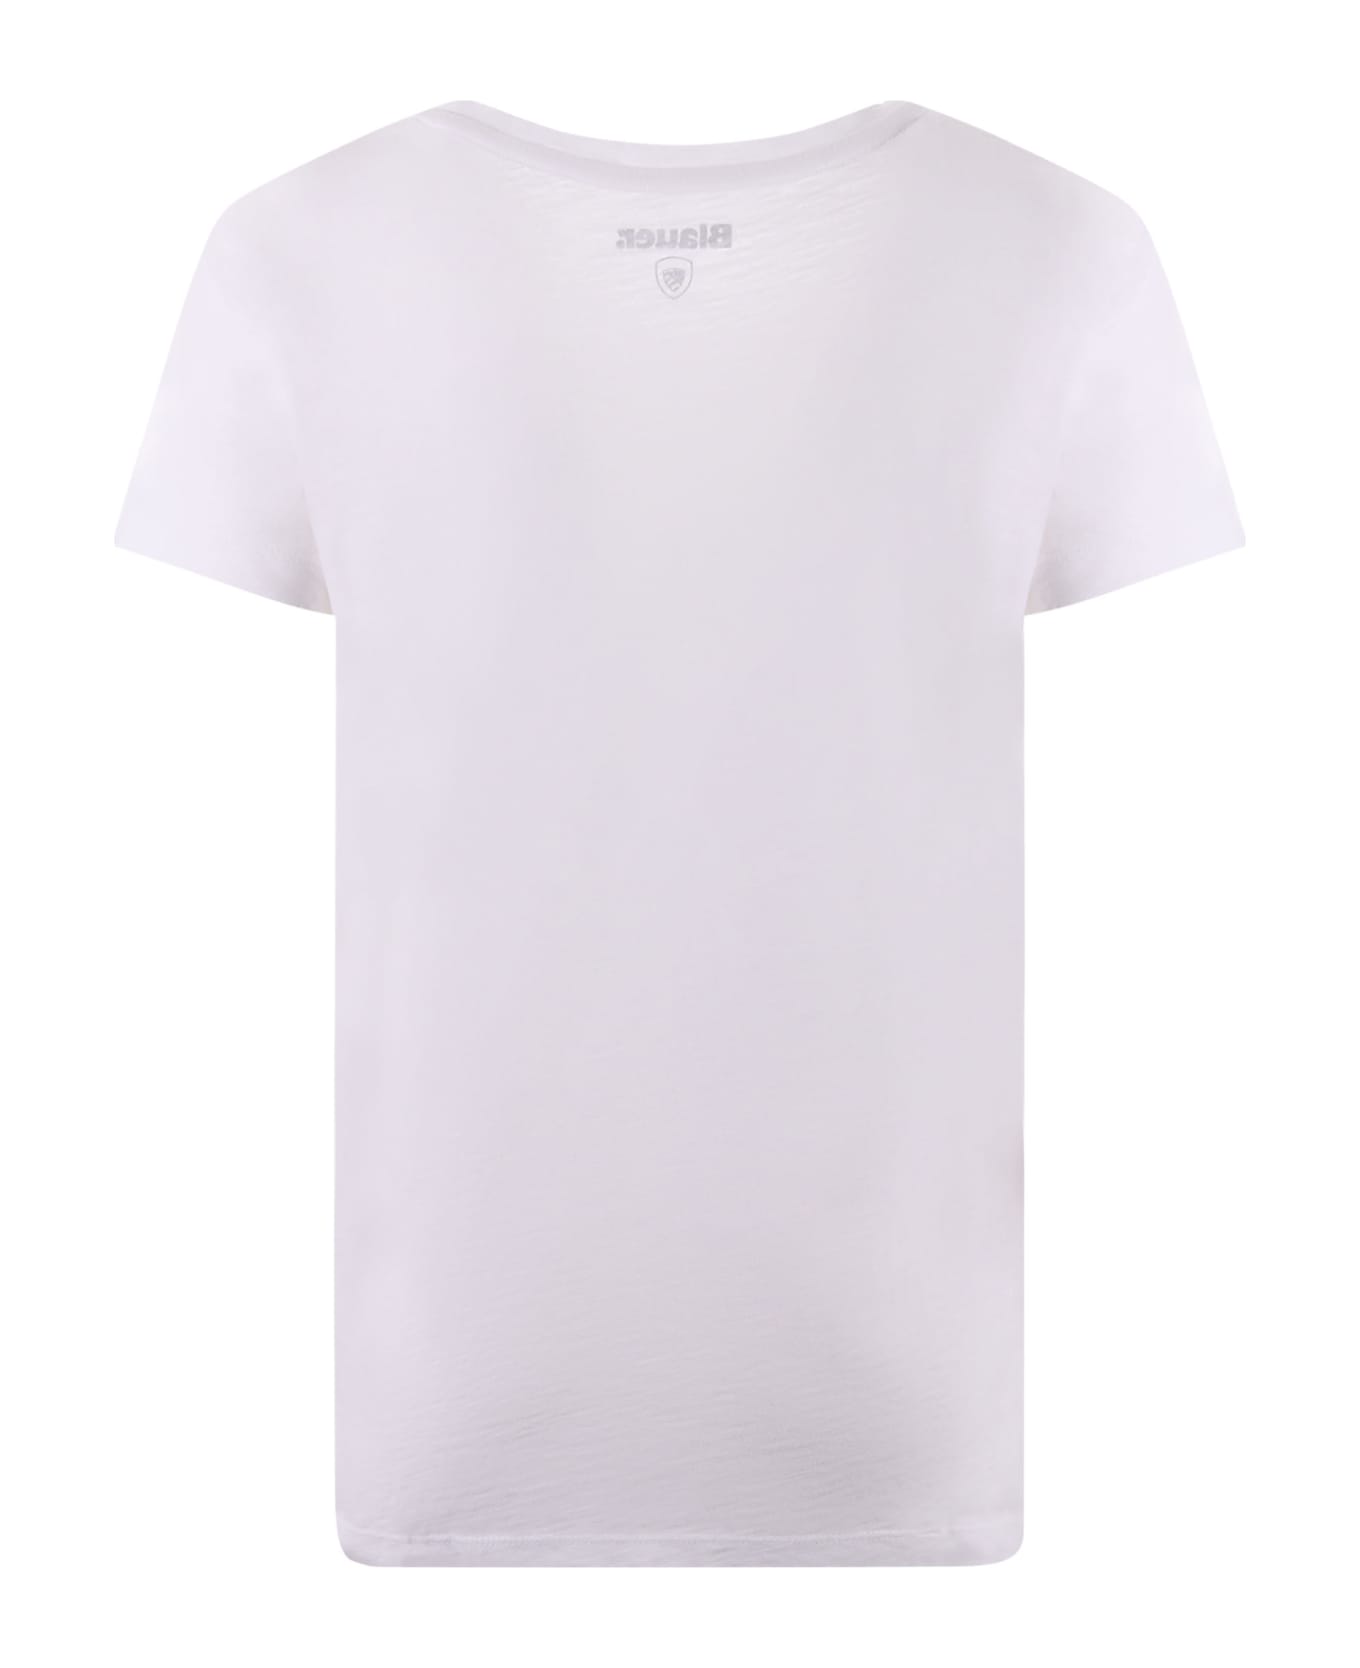 Blauer T-shirt - Bianco Tシャツ